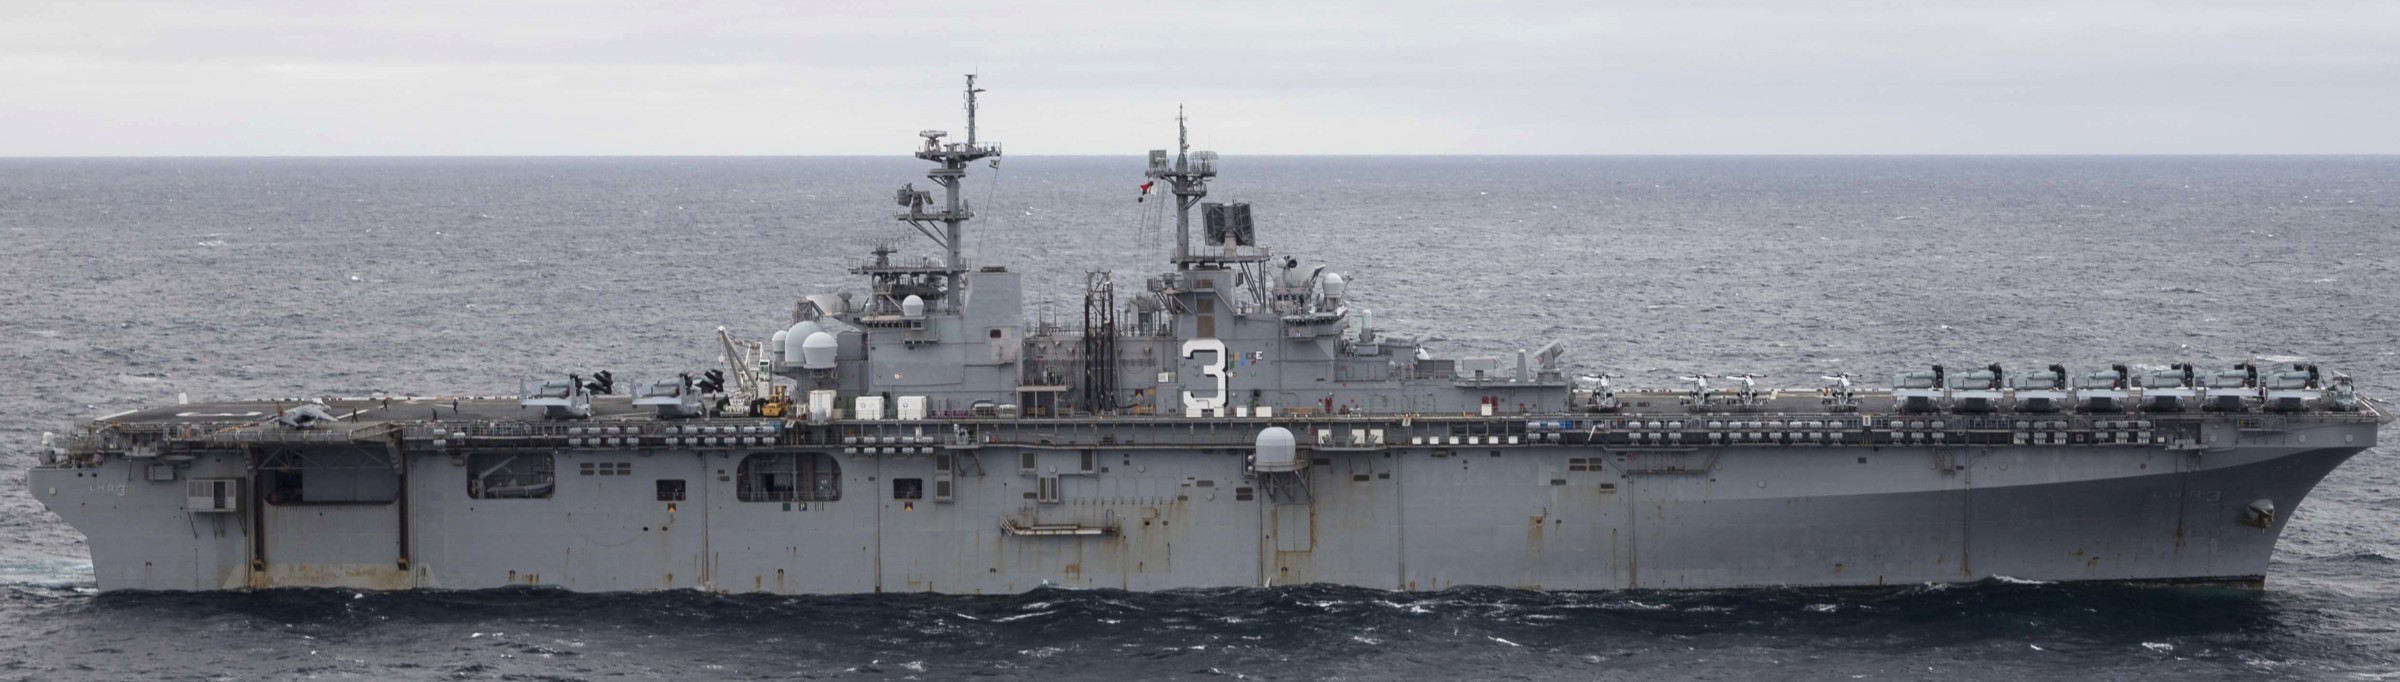 lhd-3 uss kearsarge wasp class amphibious assault ship us navy marines vmm-263 northern viking nato 228